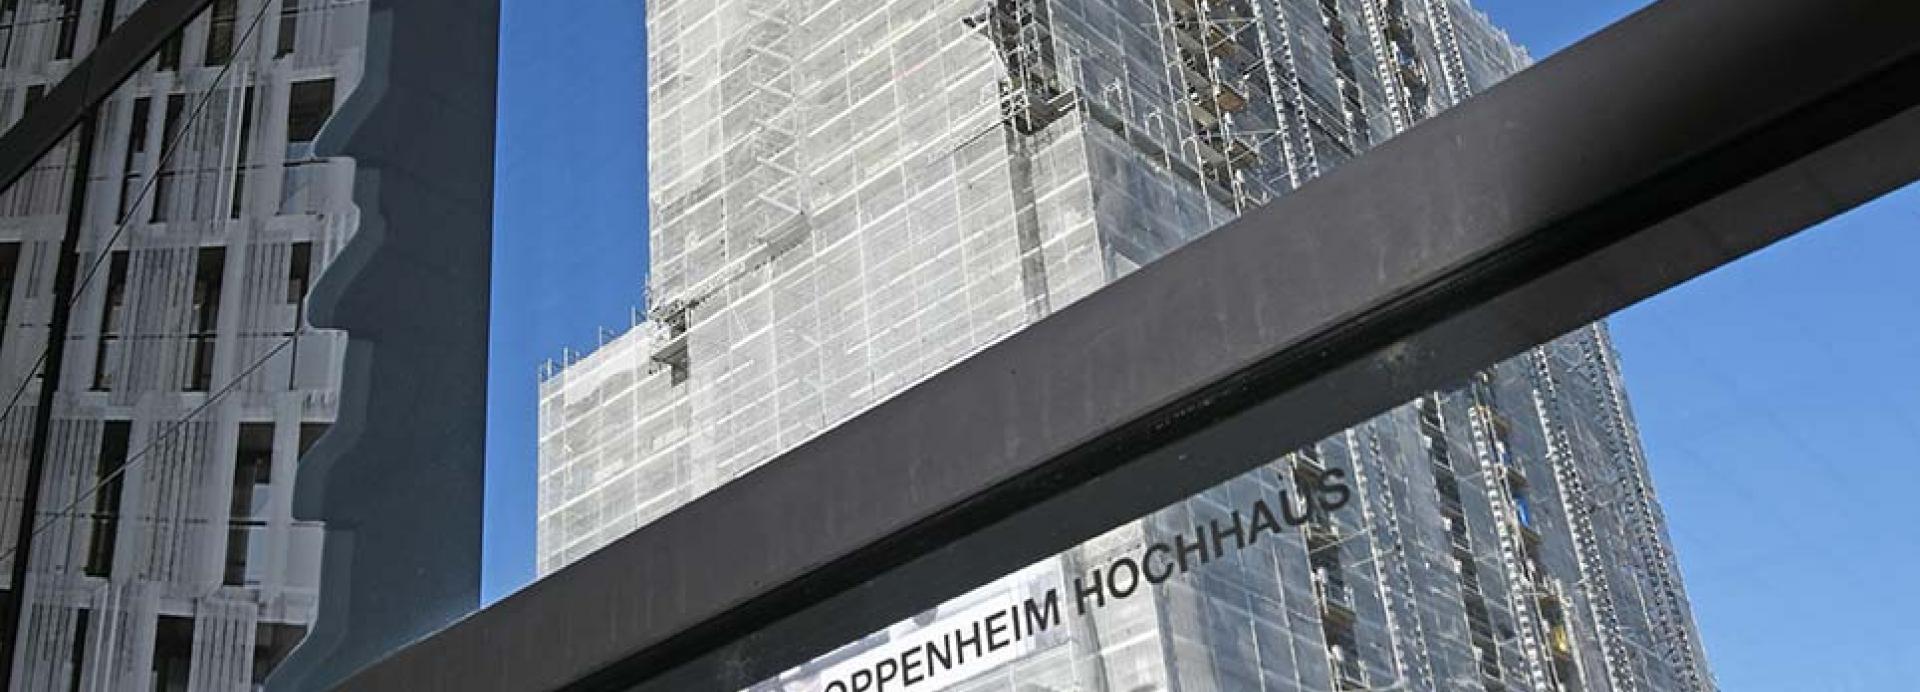 Meret Oppenheim High-Rises and-lime bricks